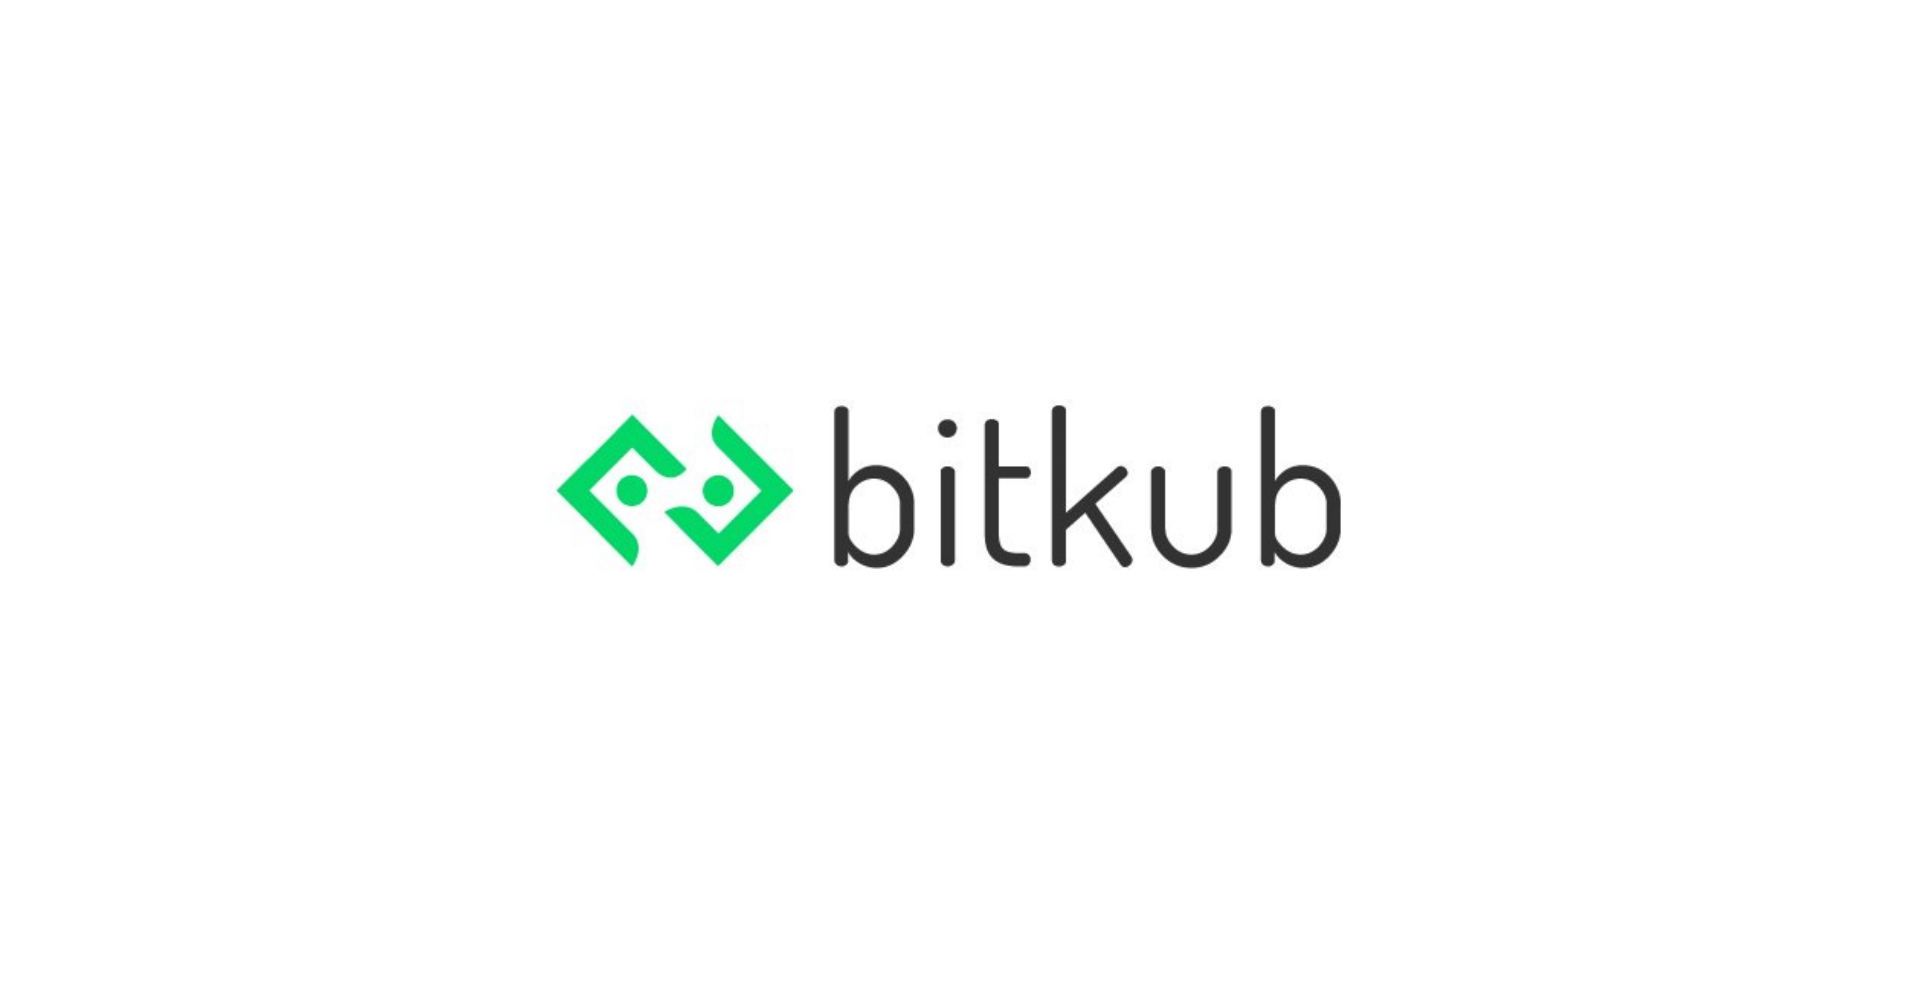 Bitkub เตรียมถกสรรพากรหลังได้ 4,122 ความเห็นจากนักลงทุนคริปโทฯ